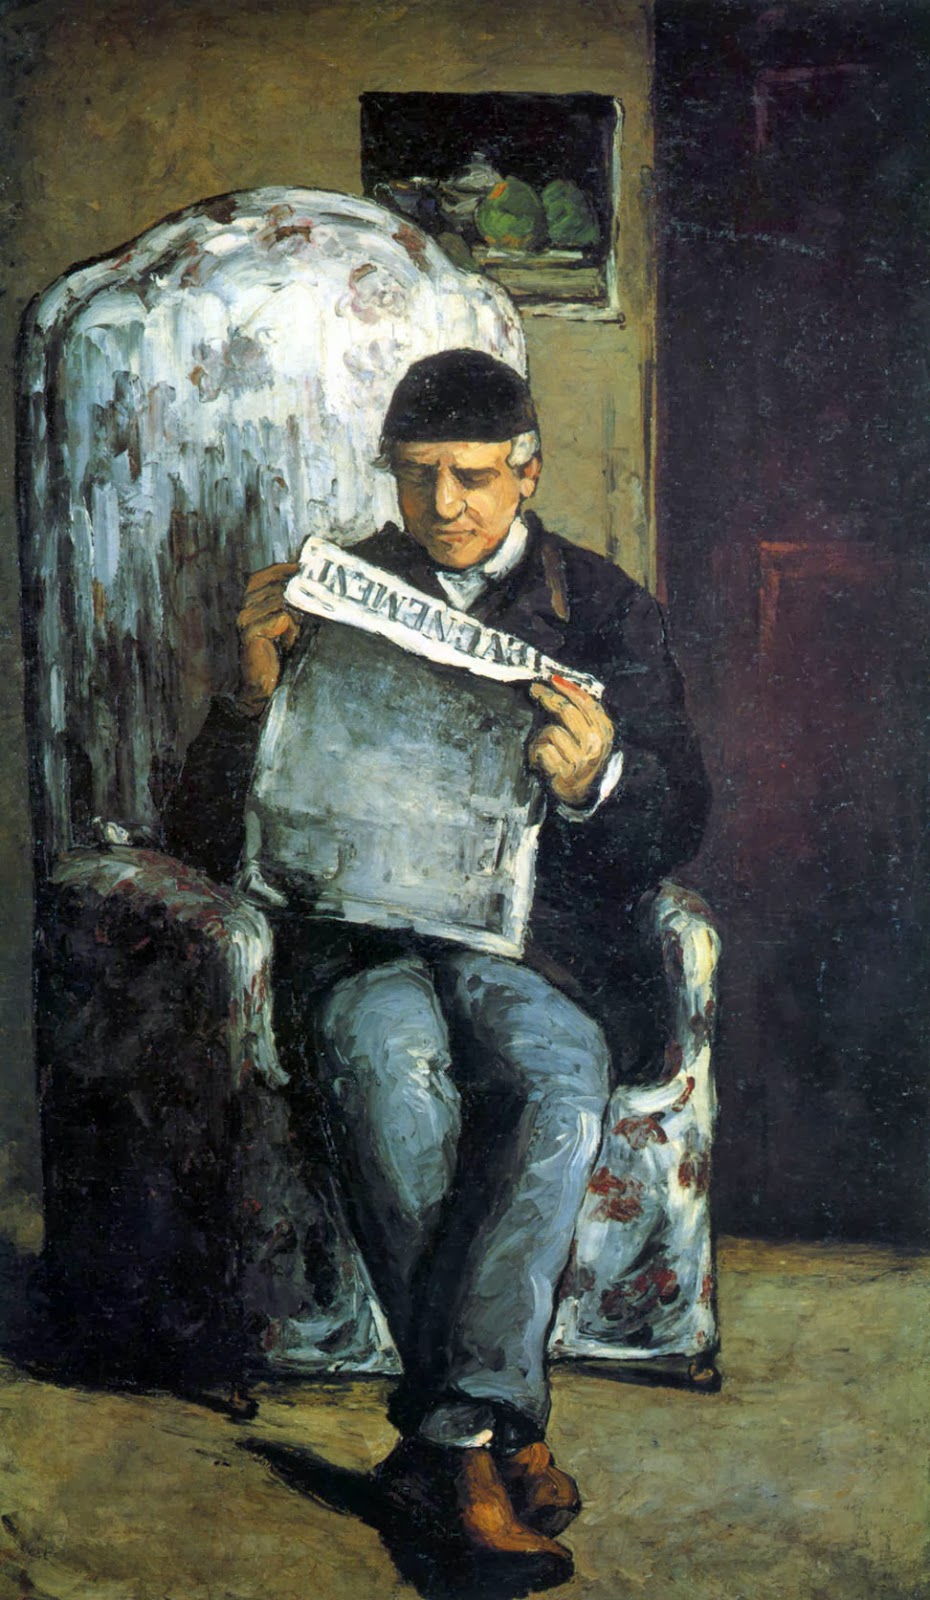 Paul+Cezanne-1839-1906 (104).jpg